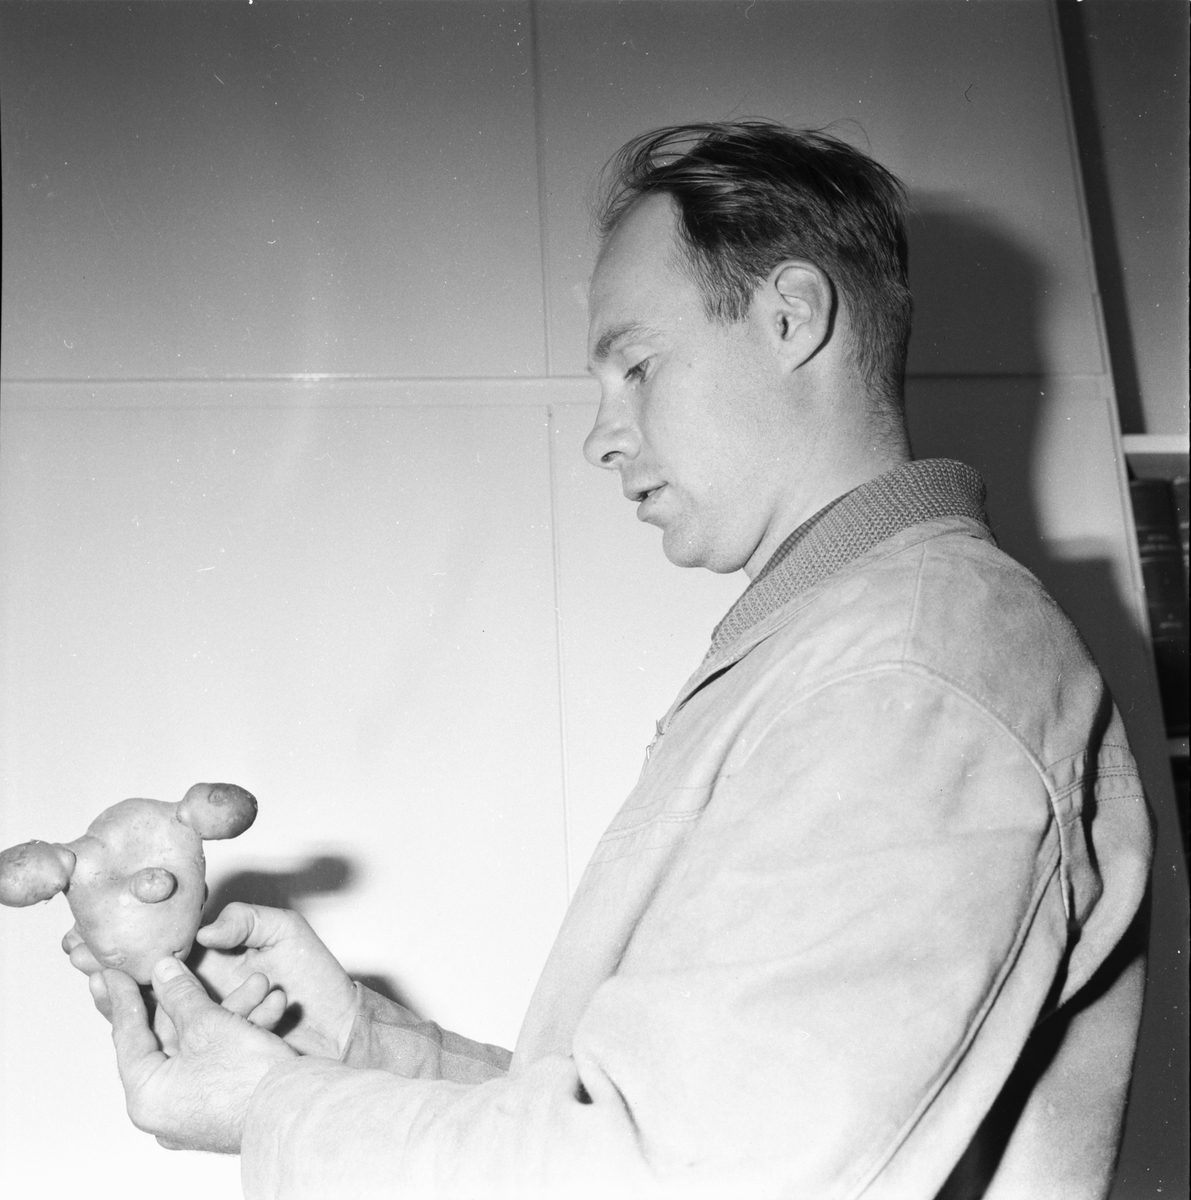 Palmborn Olle med potatis.
29/9-1965